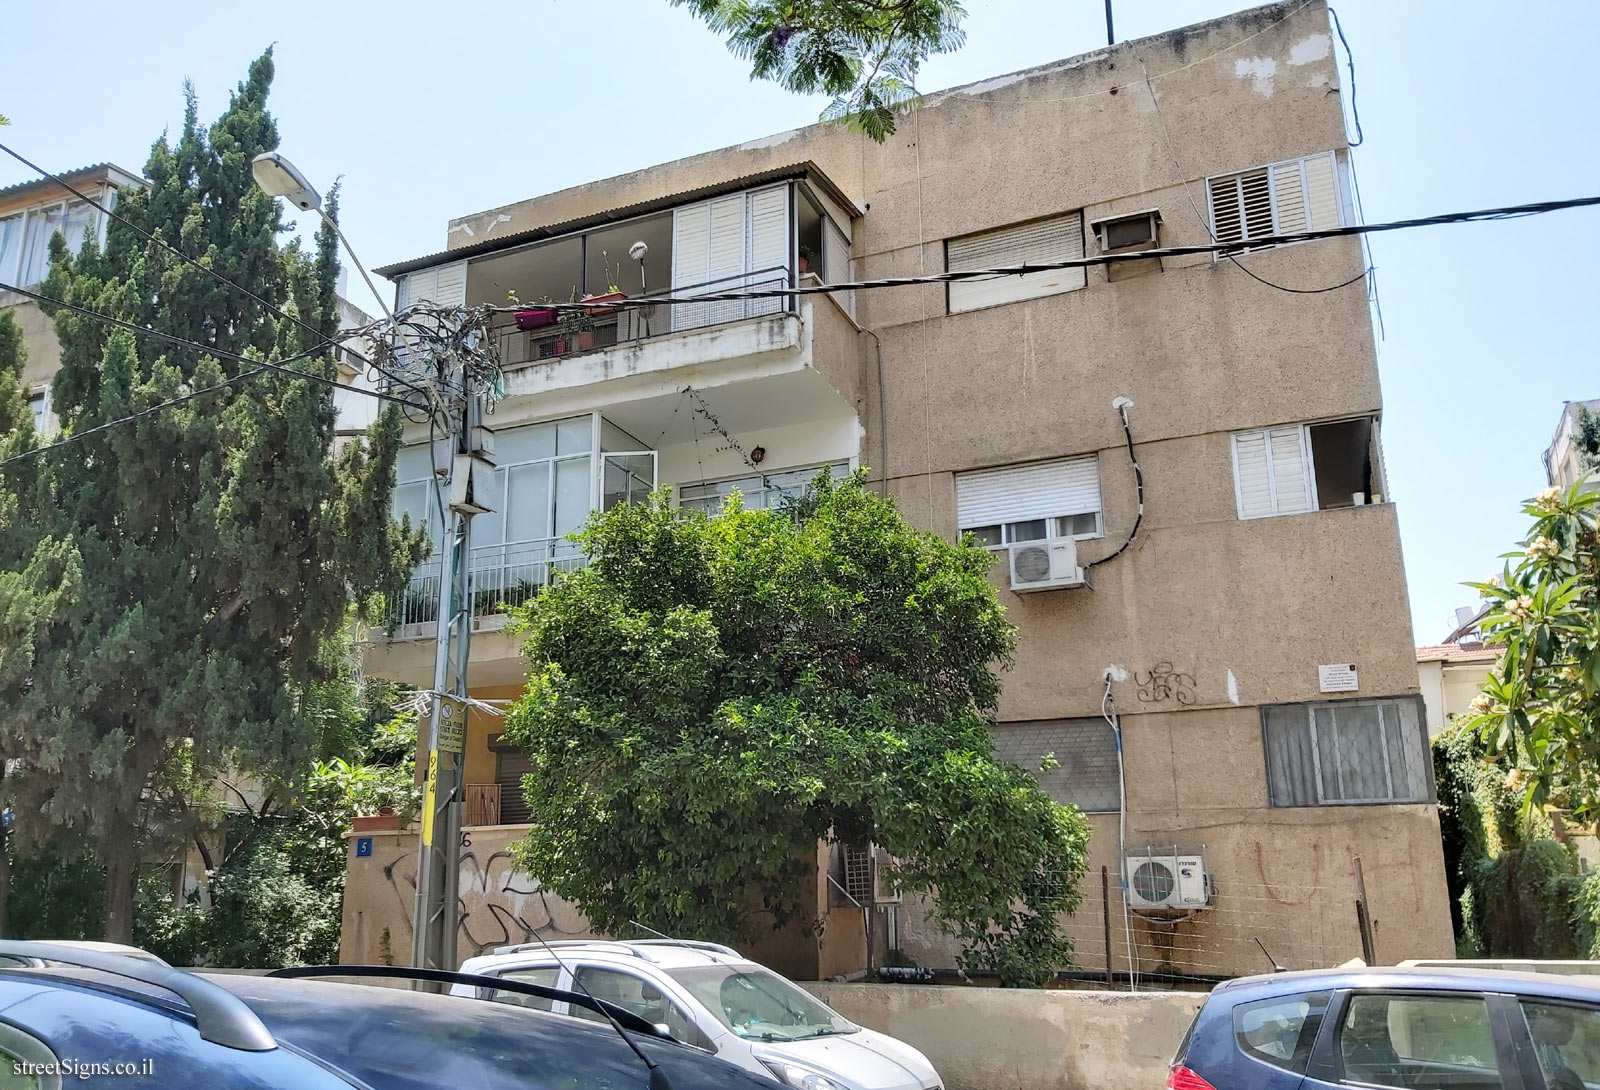 The house of Pinchas Eshet - Perets Hayut St 5, Tel Aviv-Yafo, Israel